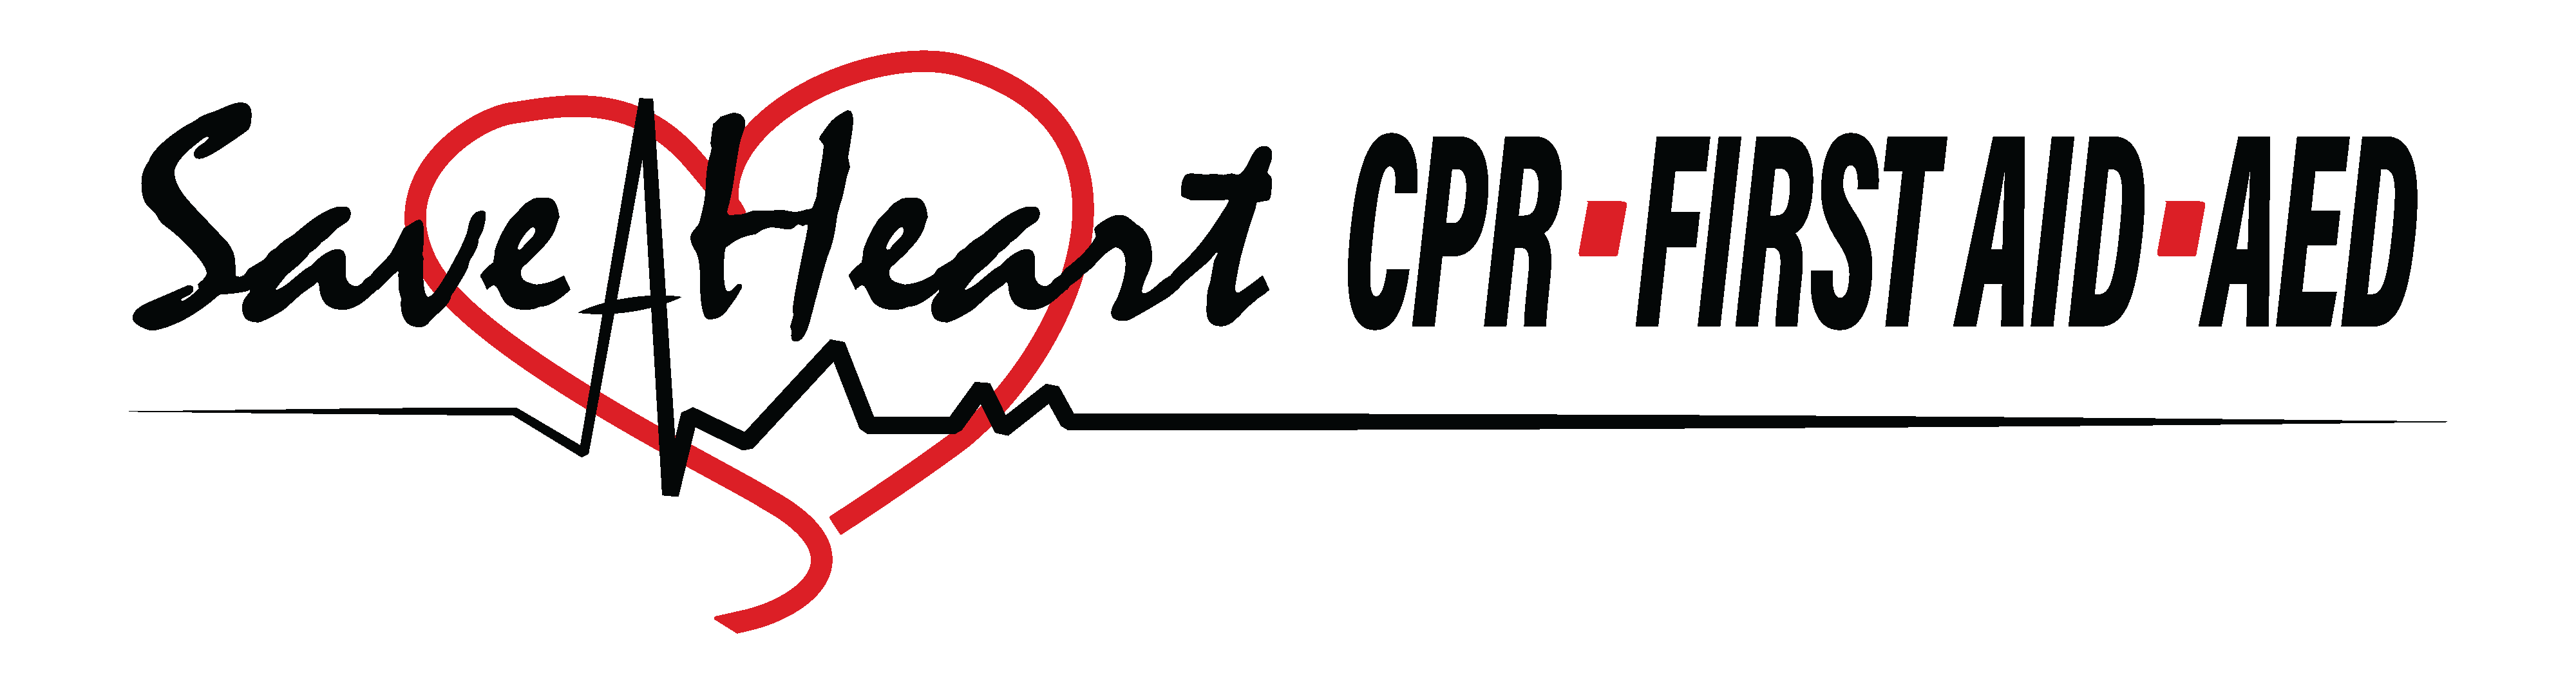 Save A Heart logo